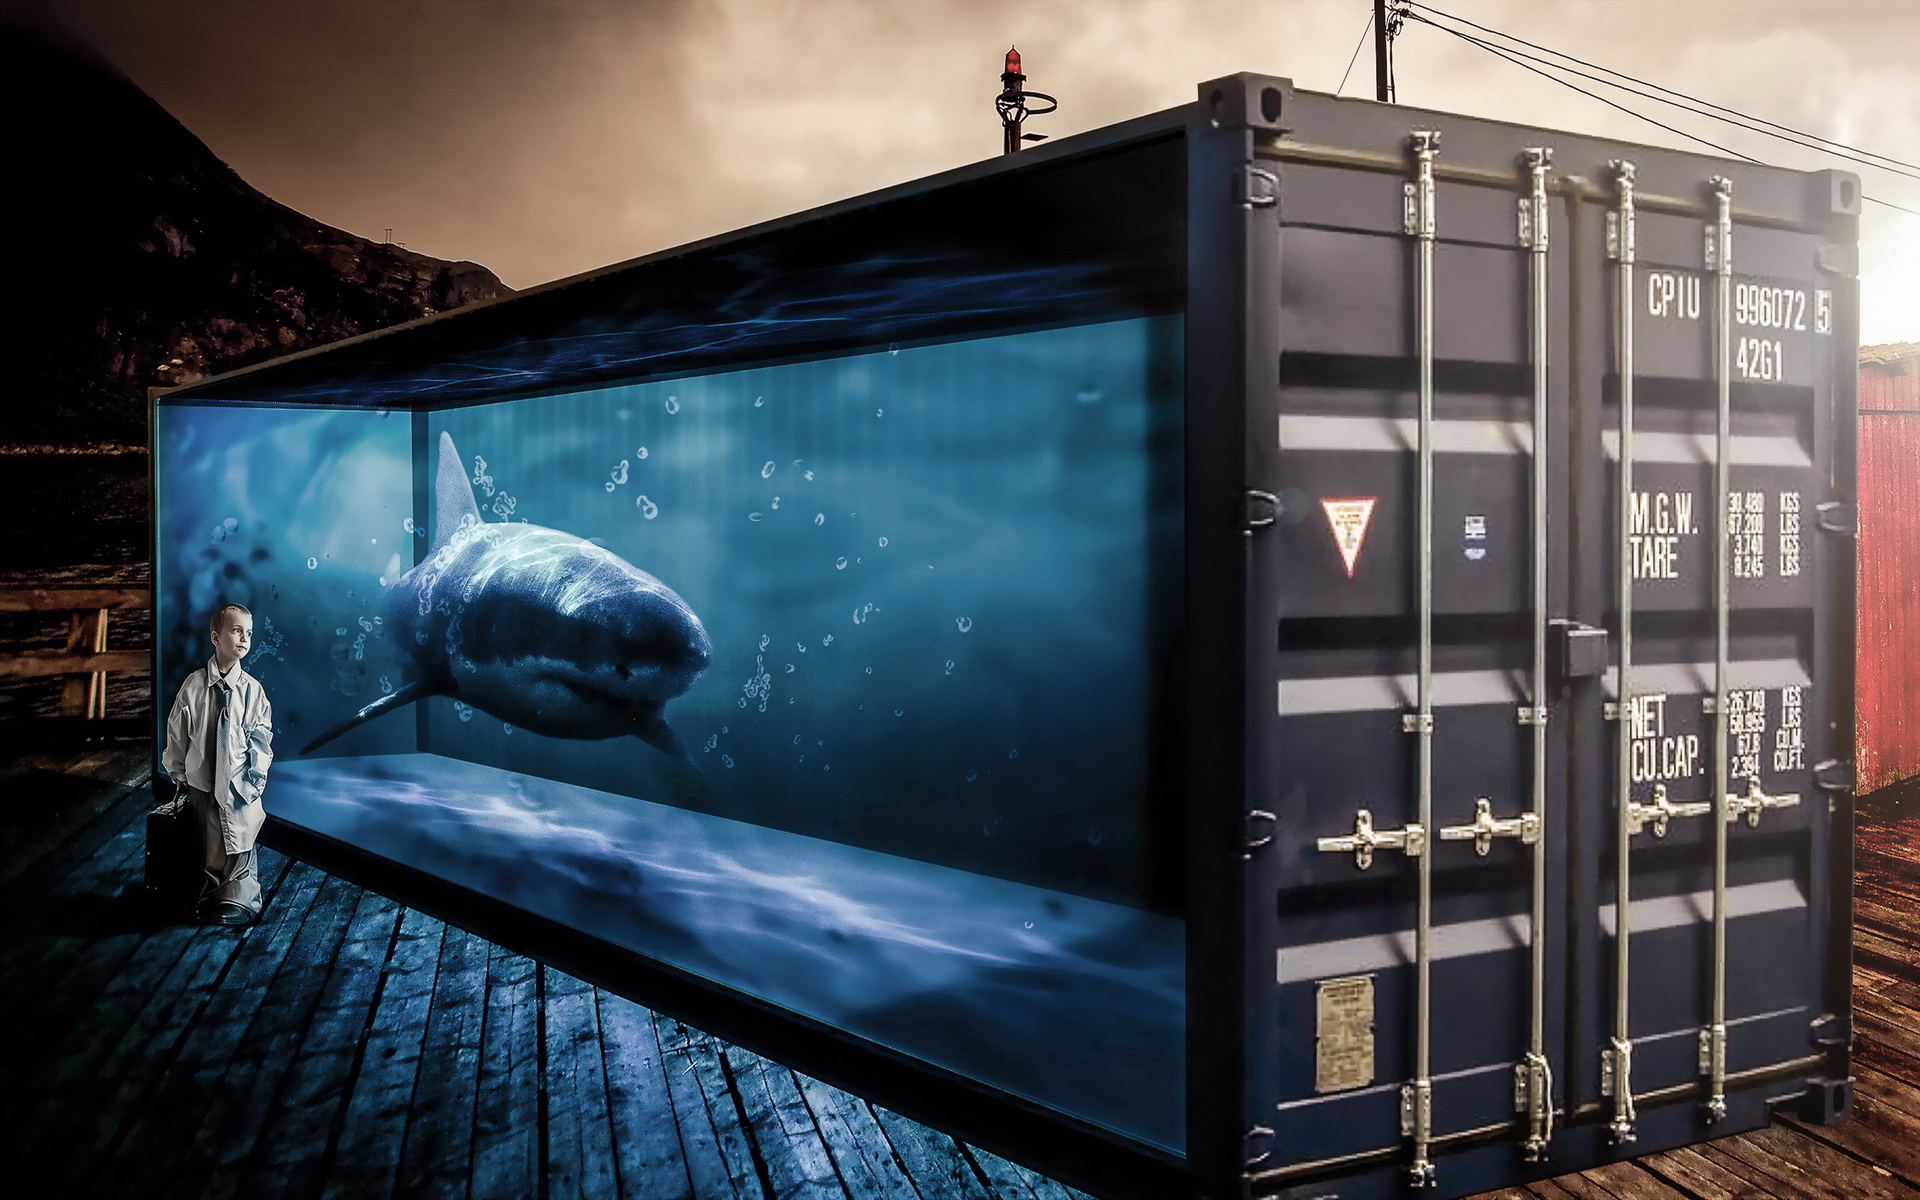 Download mobile wallpaper Sharks, Shark, Animal for free.